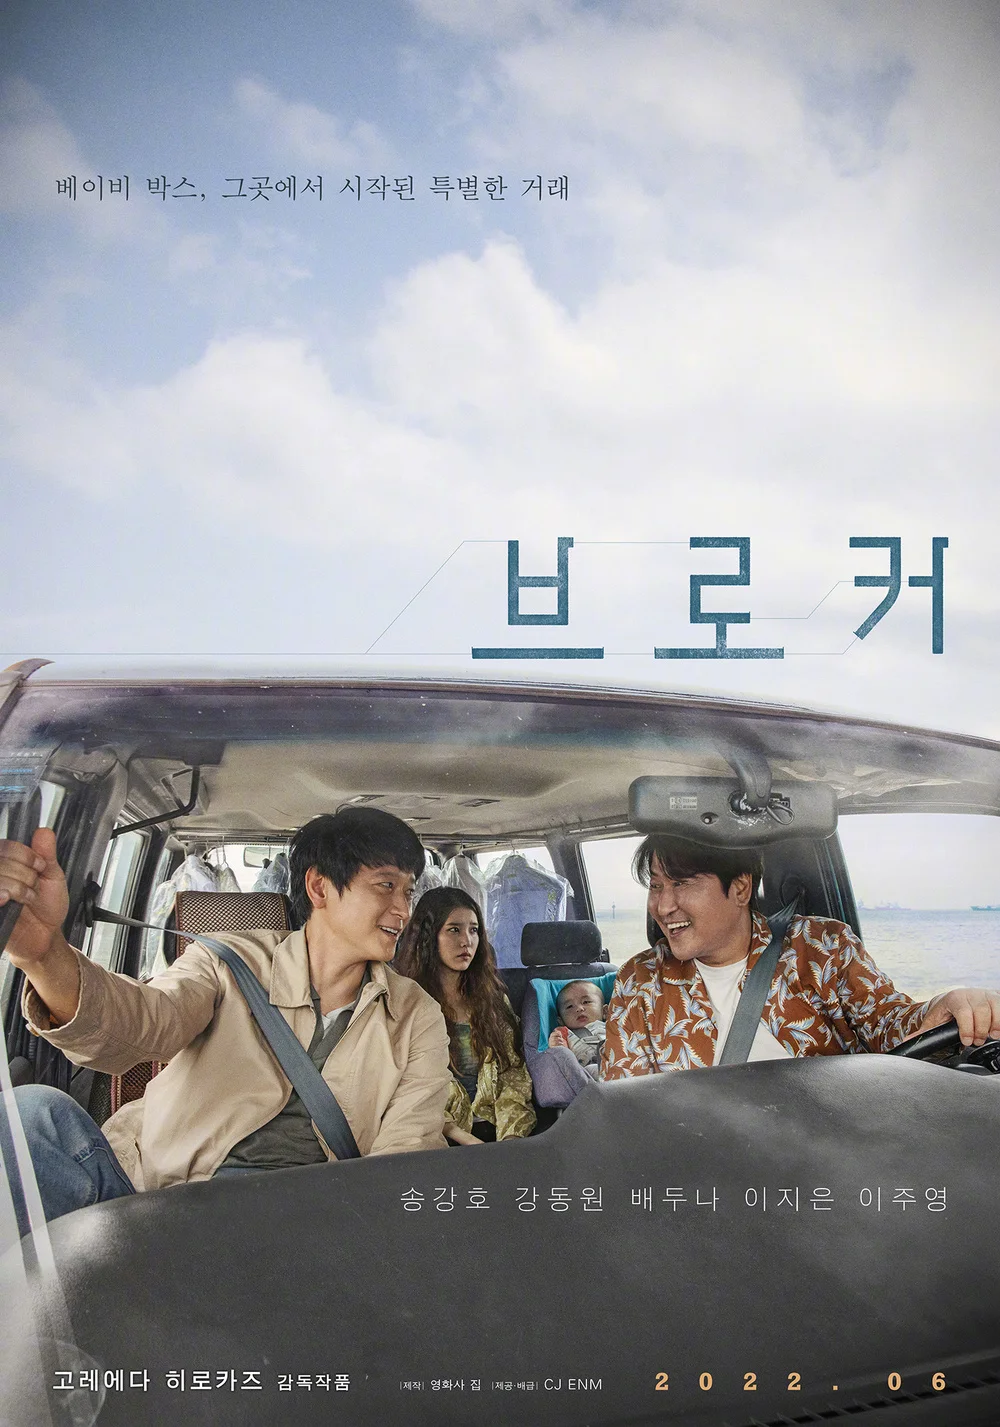 The first Korean film "Broker" directed by Hirokazu Koreeda revealed the poster